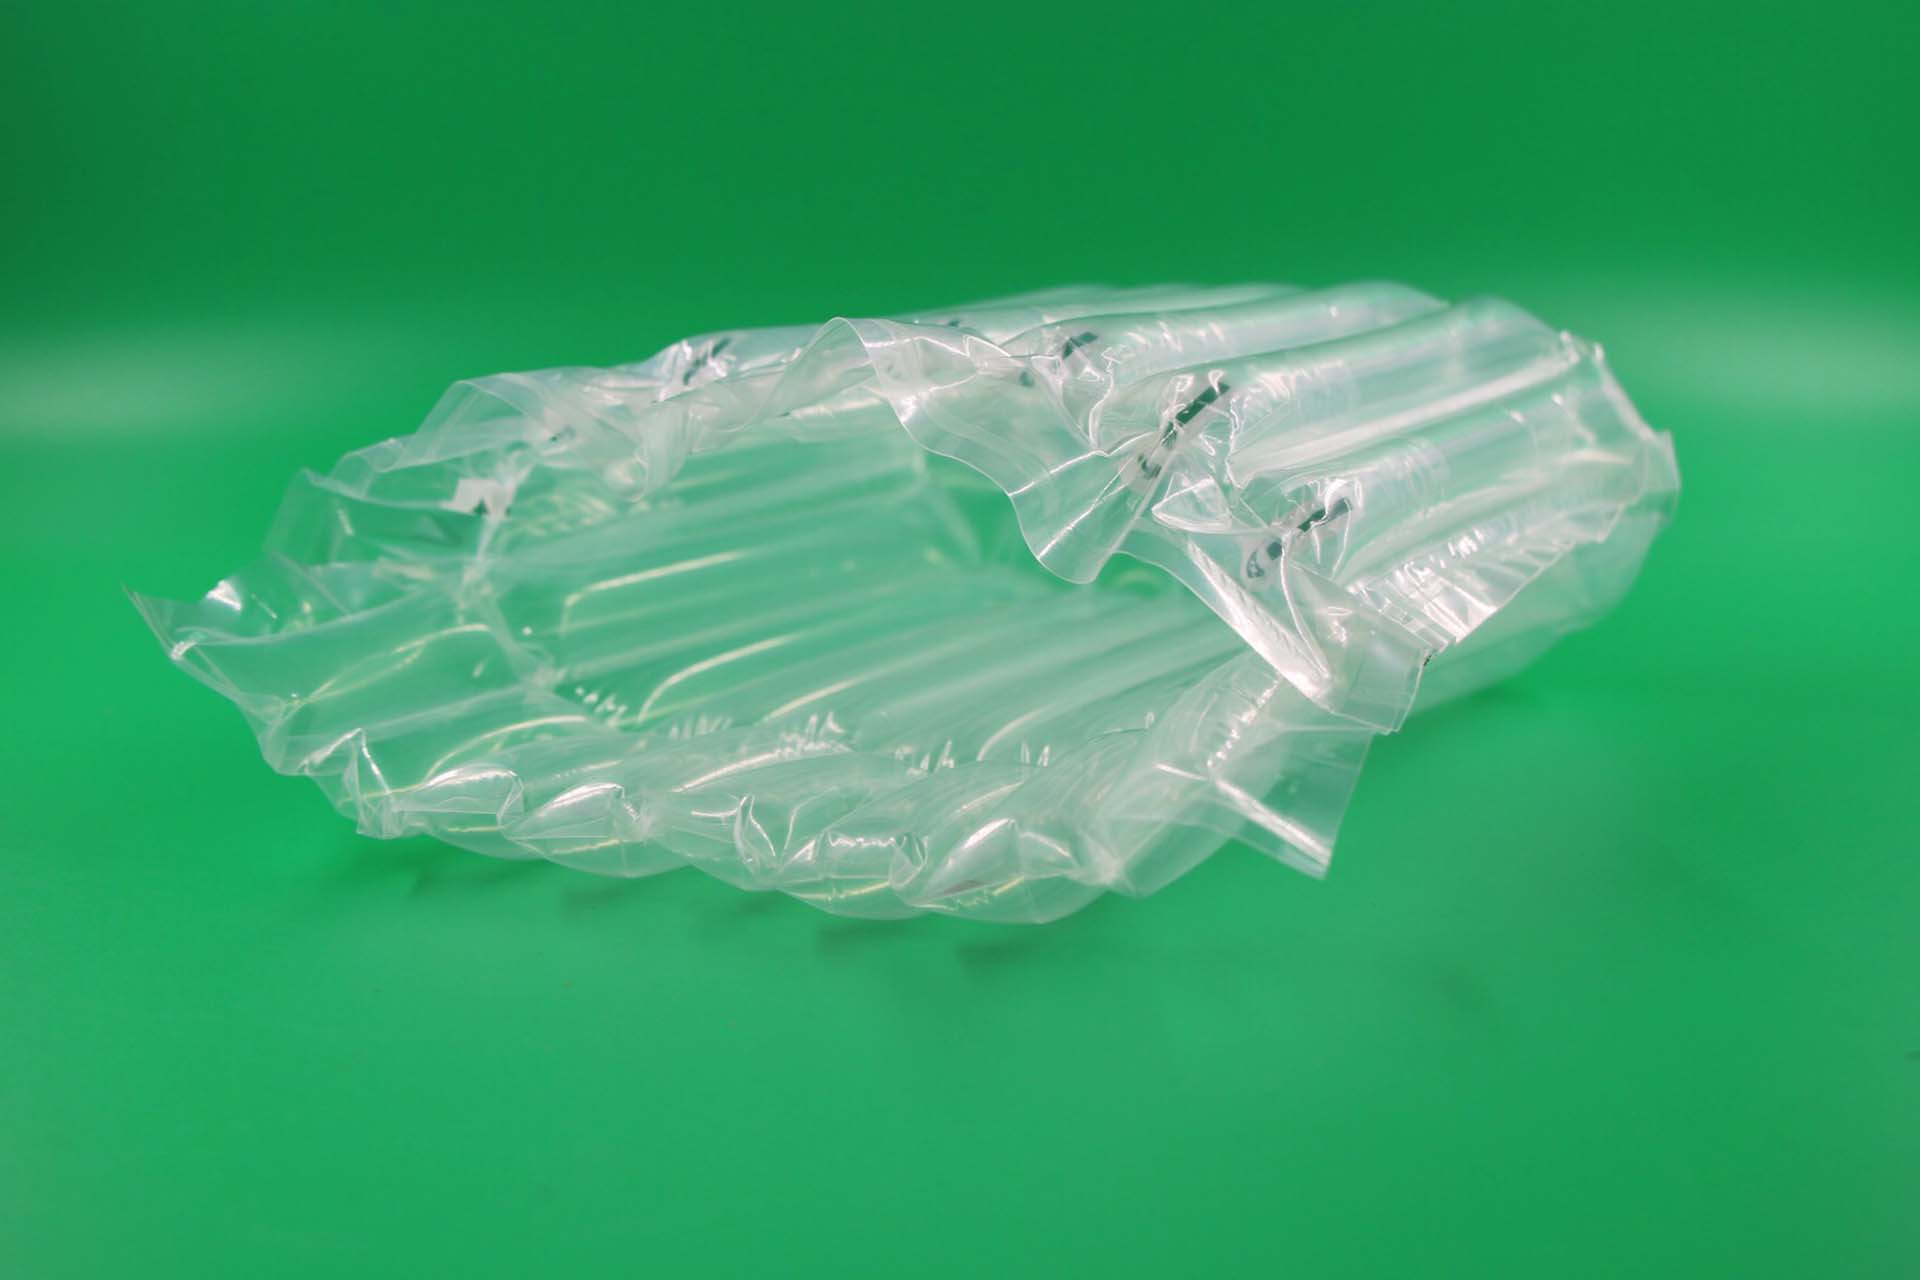 Sunshinepack ODM airbag packaging manufacturers for transportation